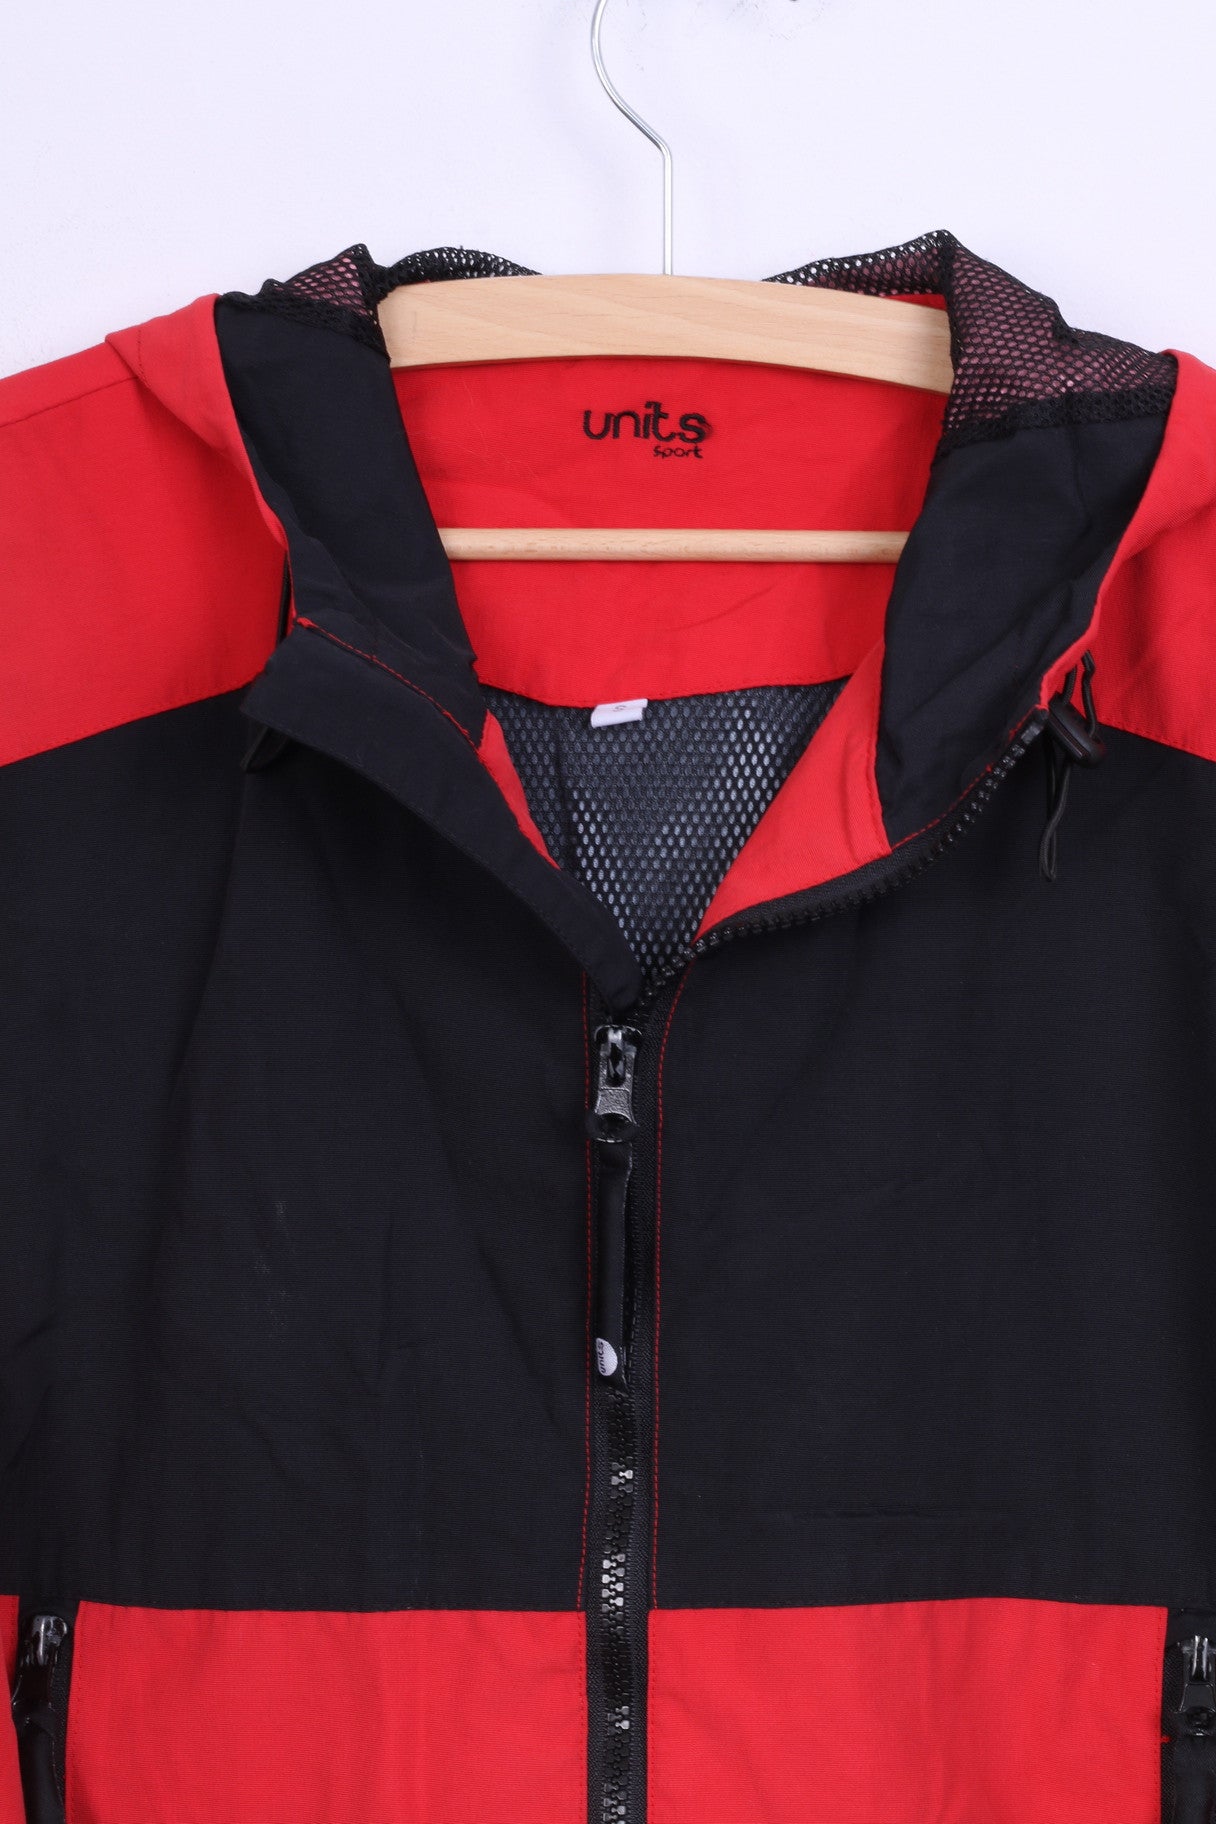 Units Sport Mens S Jacket Red Nylon Waterproof Hood Sport